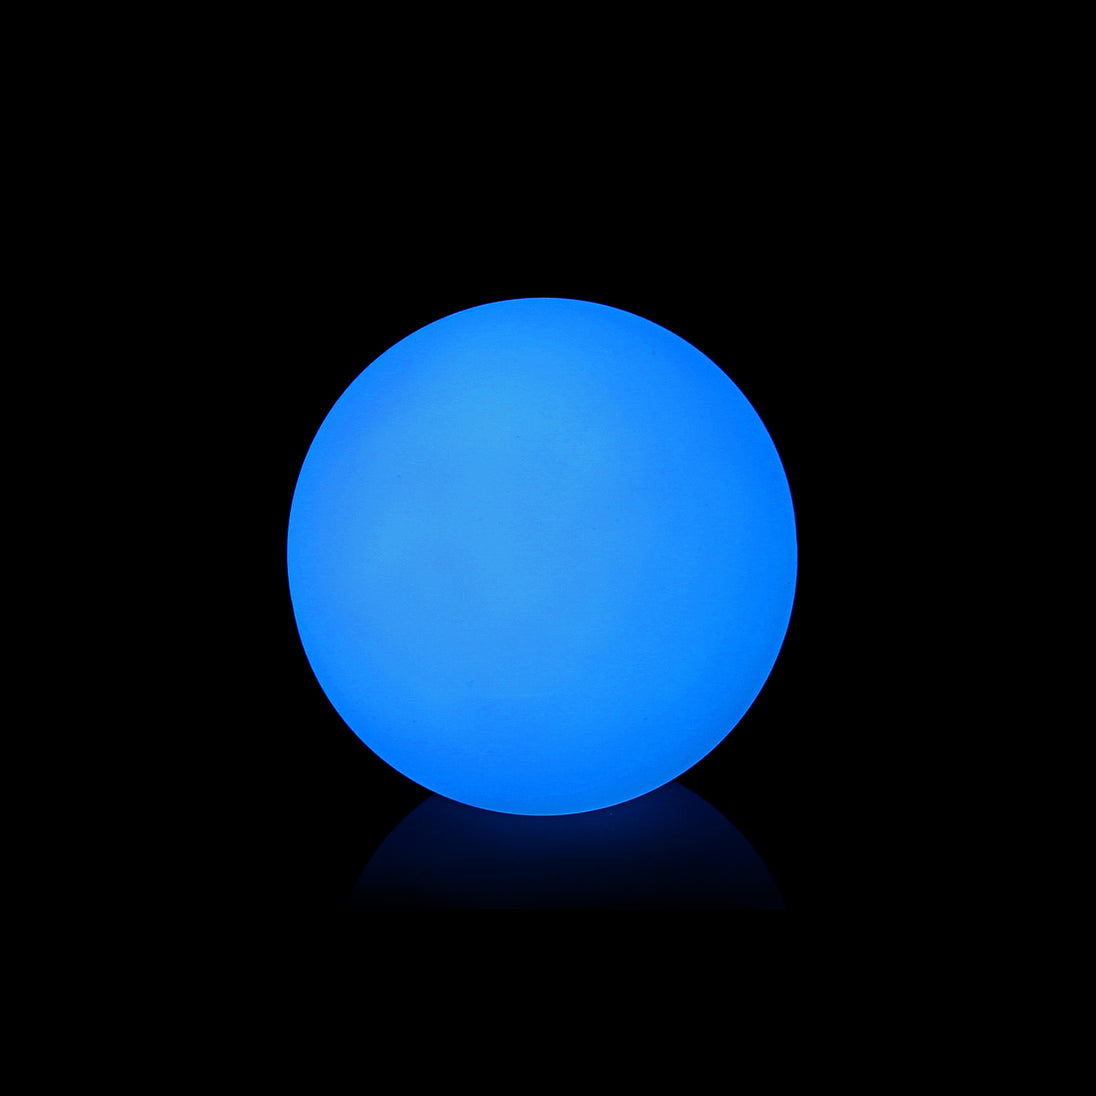 Blue LED Glow Ball